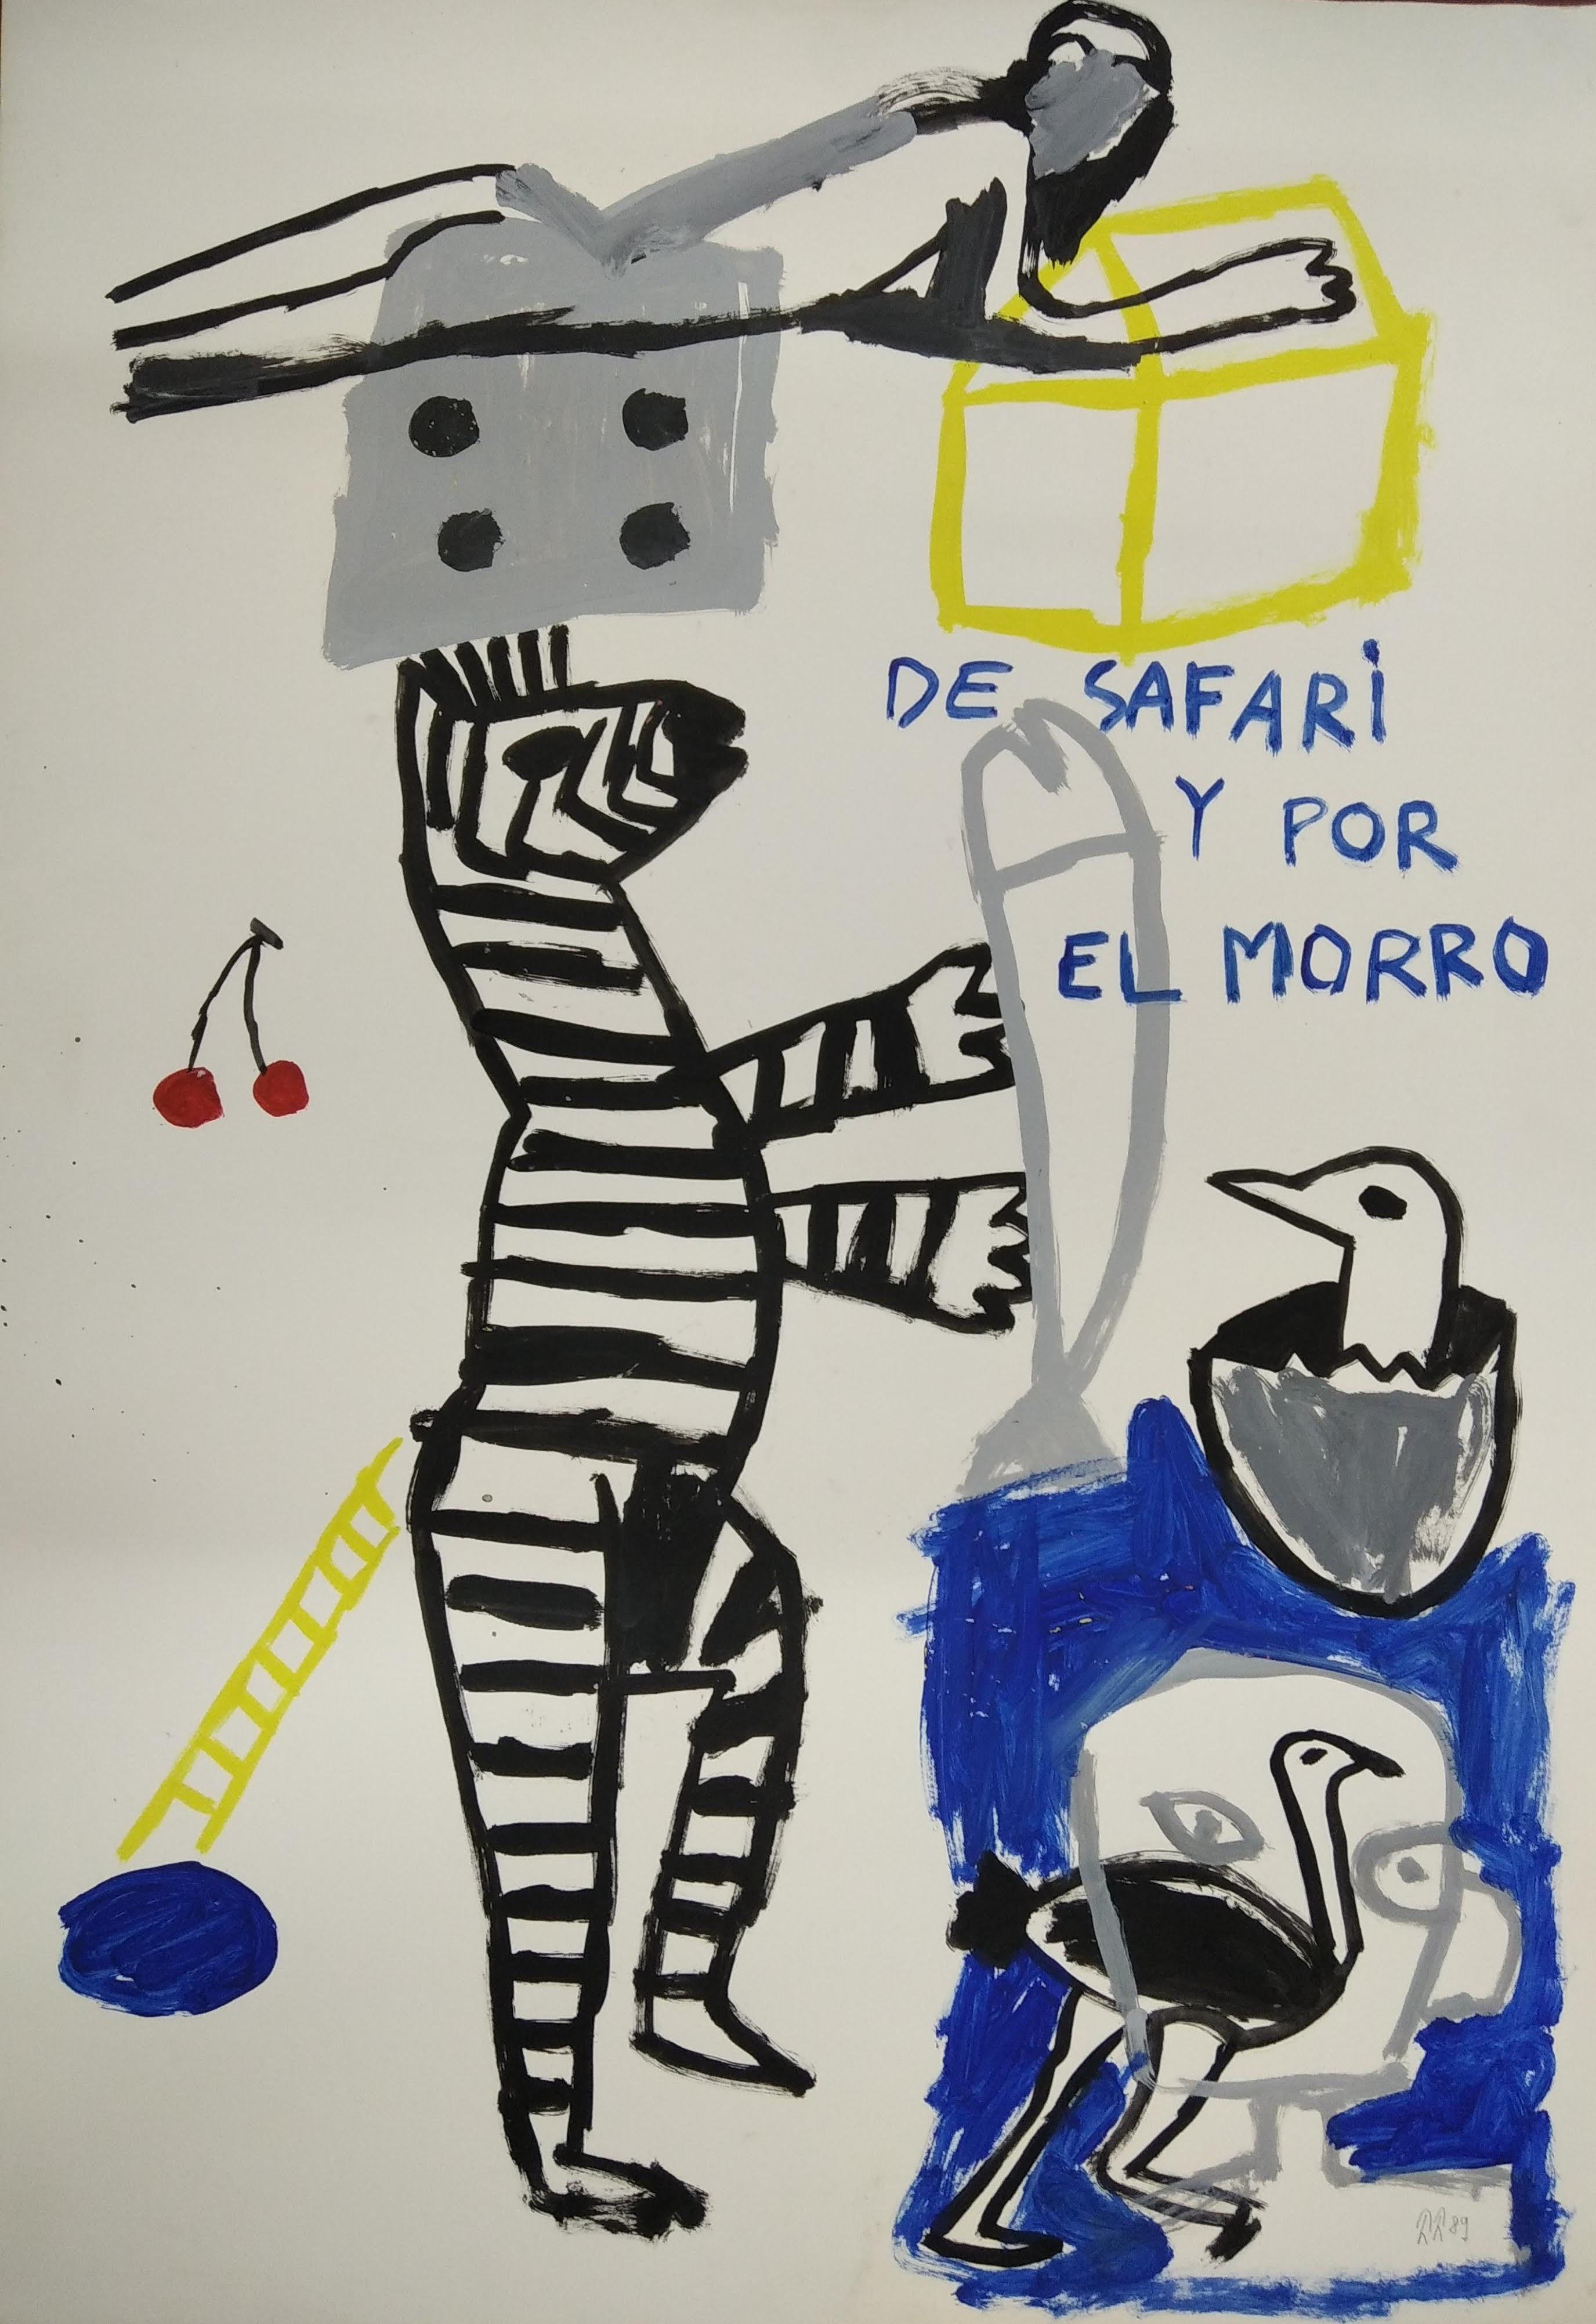 De safari y por el morro - Mixed Media Art by Pepe Nebot